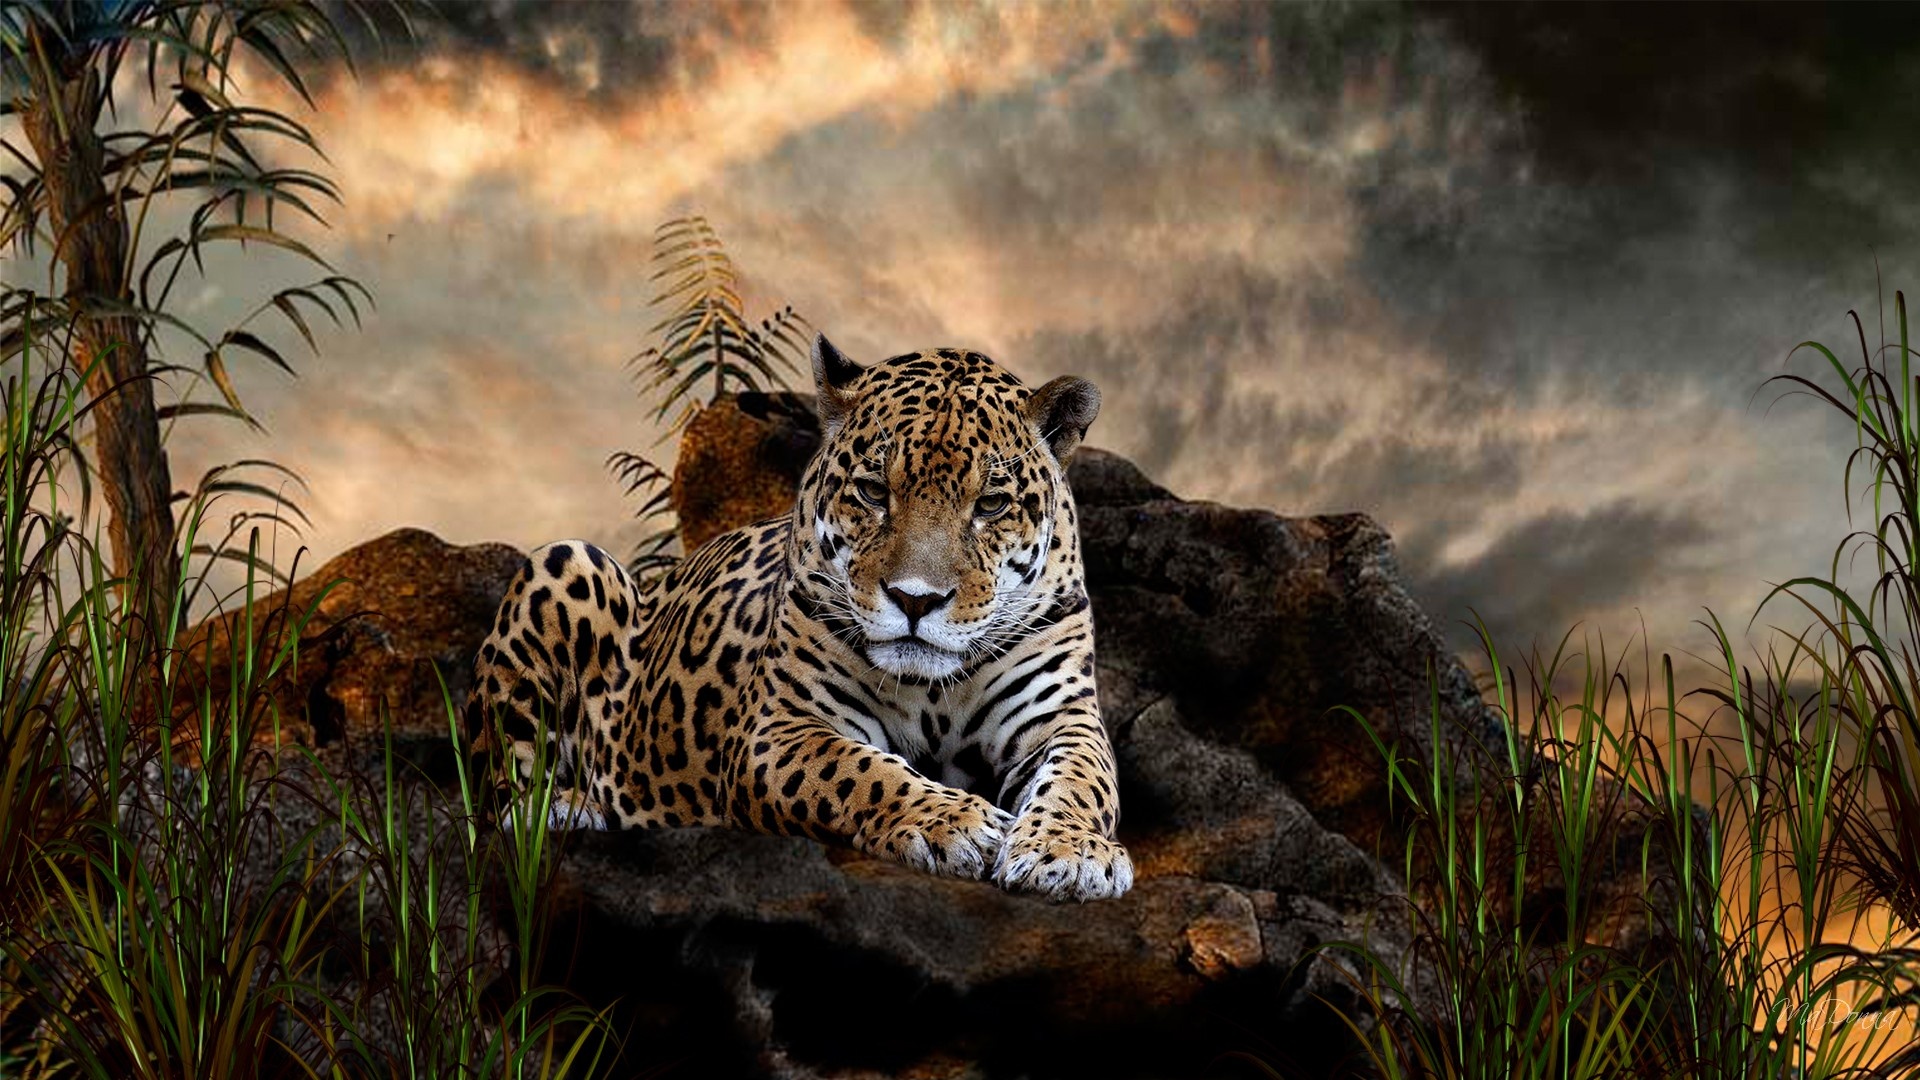 HD desktop wallpaper: Cats, Jaguar, Animal download free picture #301347